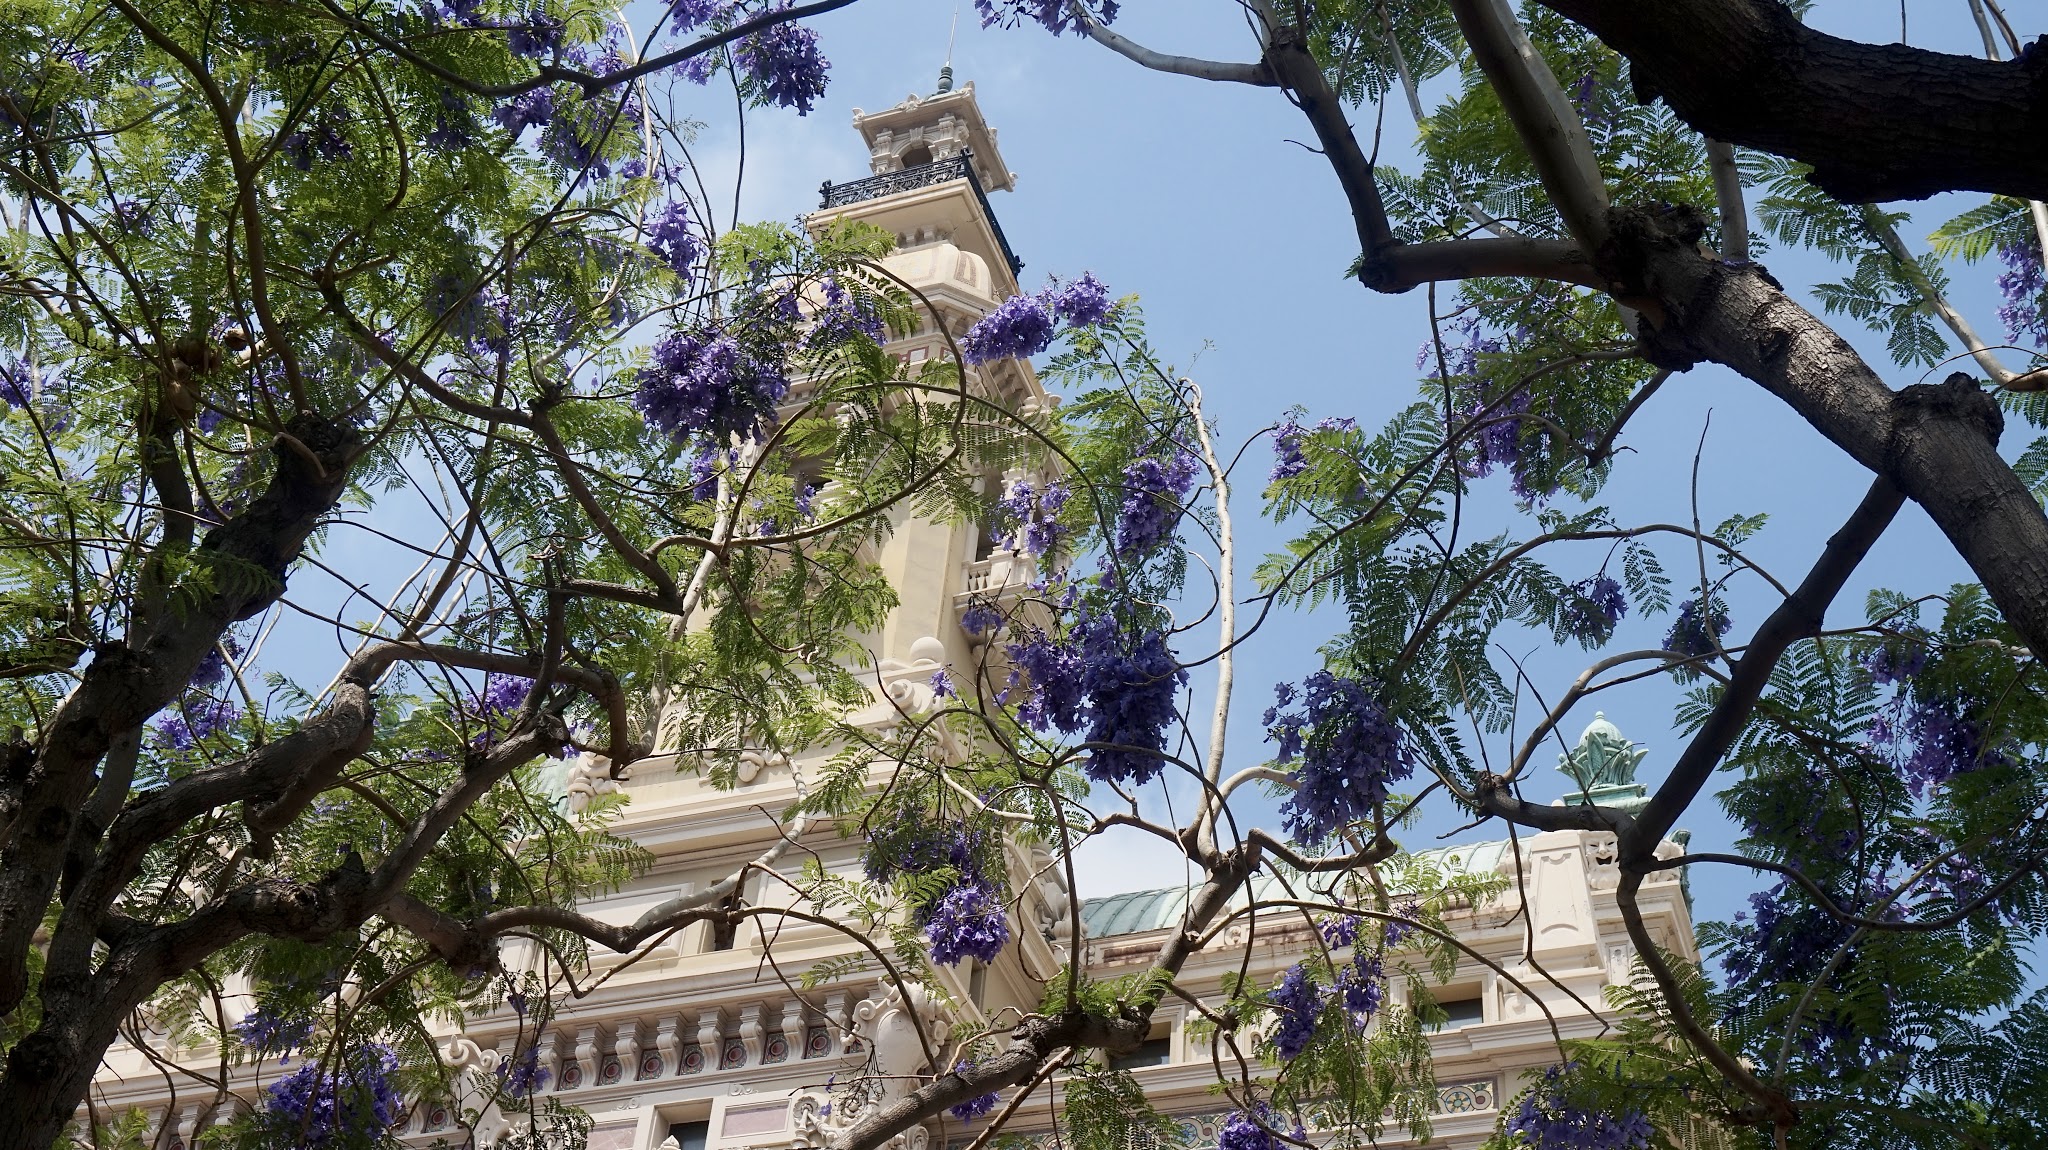 Ornate casino building through trees with purple flowers